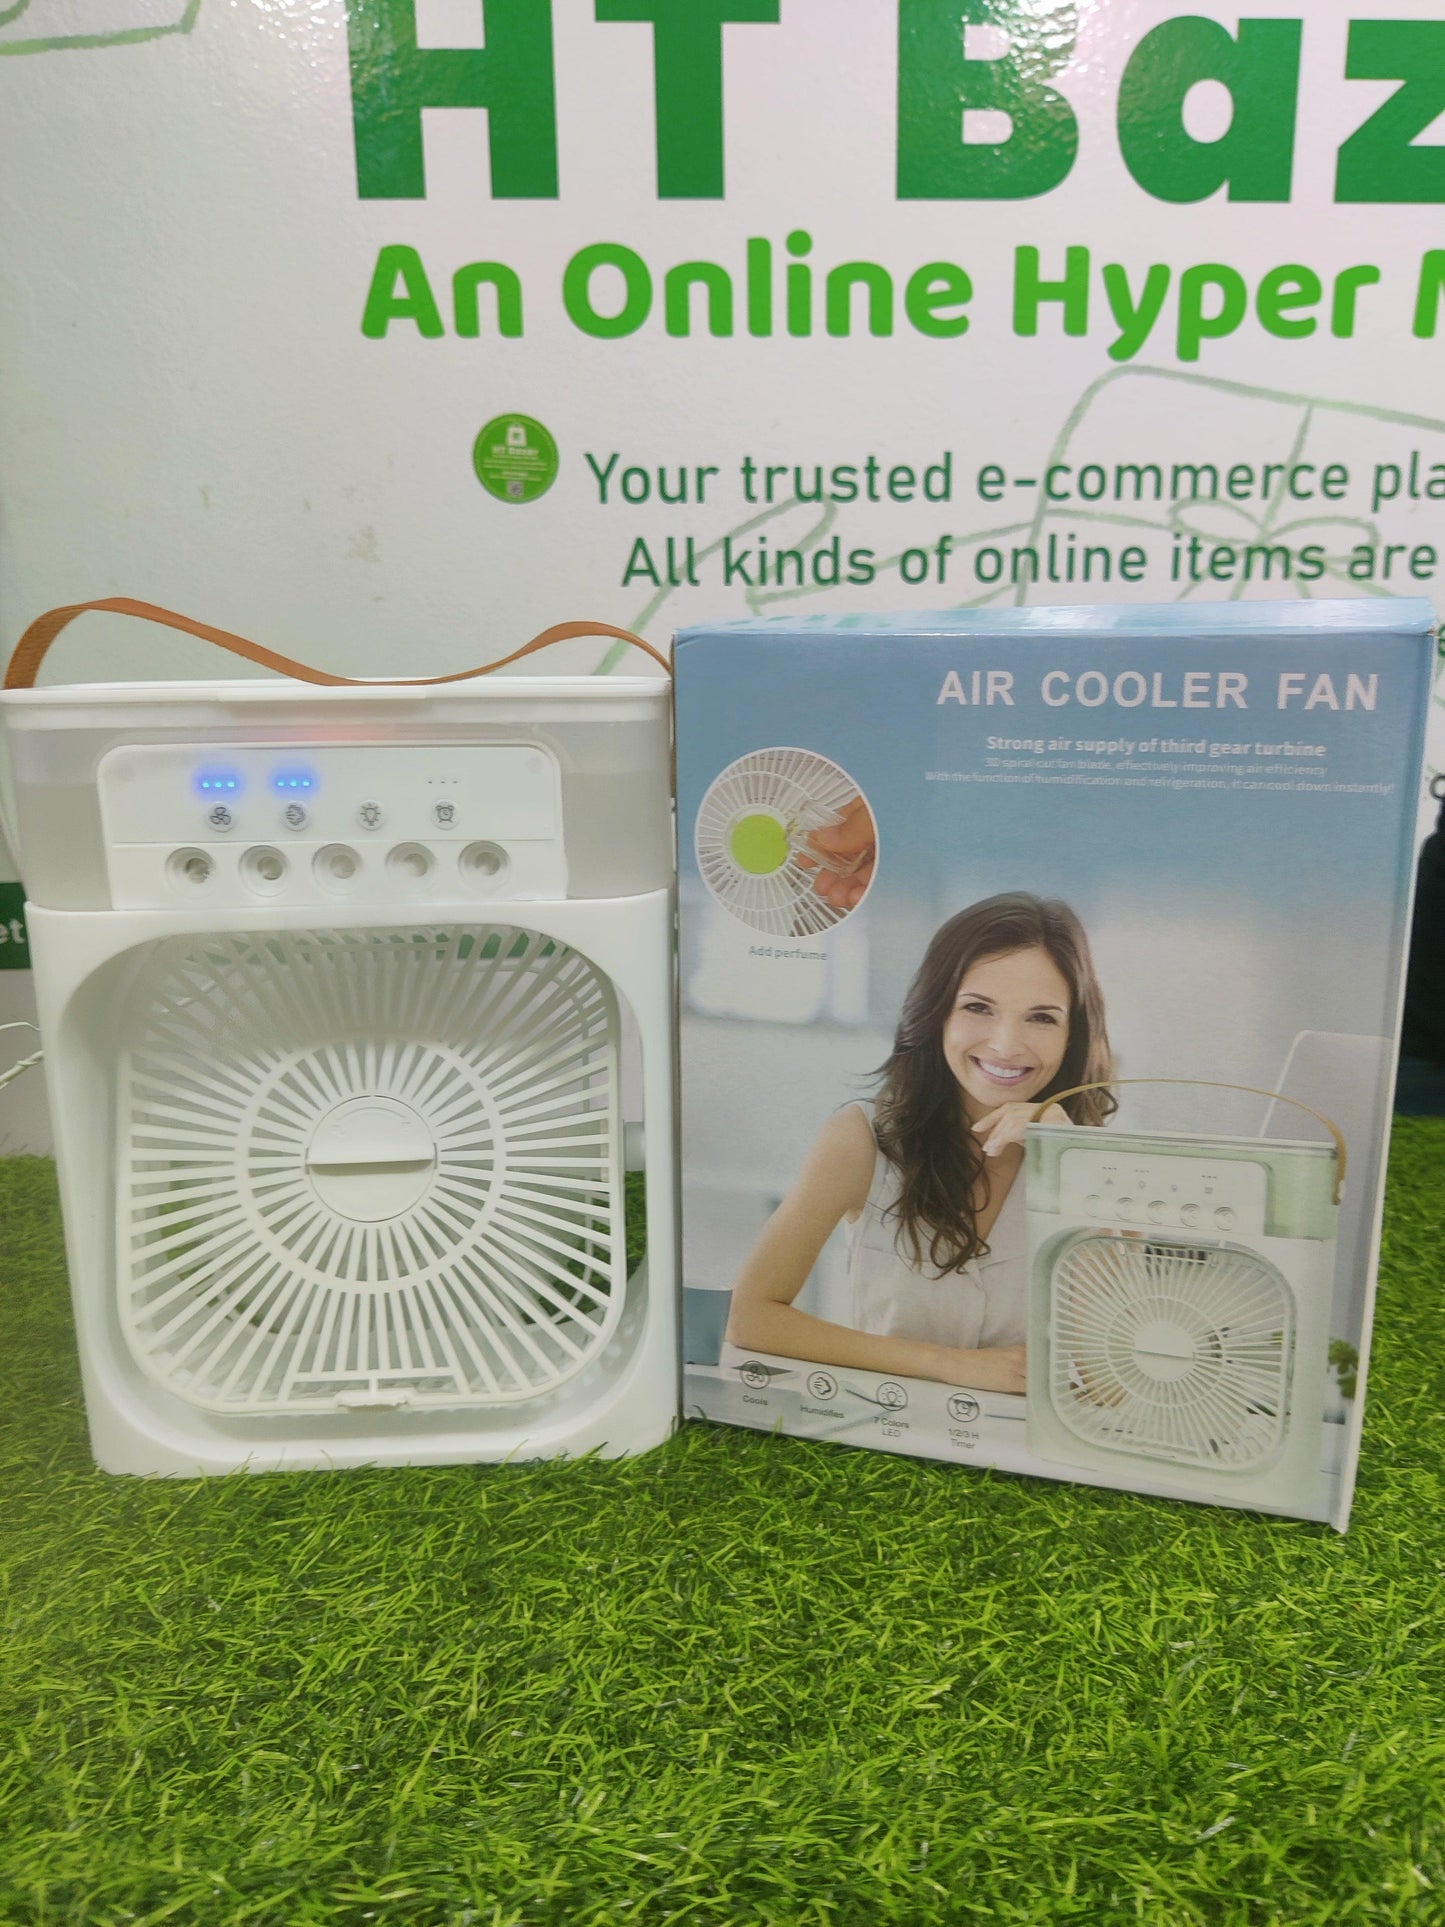 Premium high Quality New Model Air Cooler Fan - HT Bazar